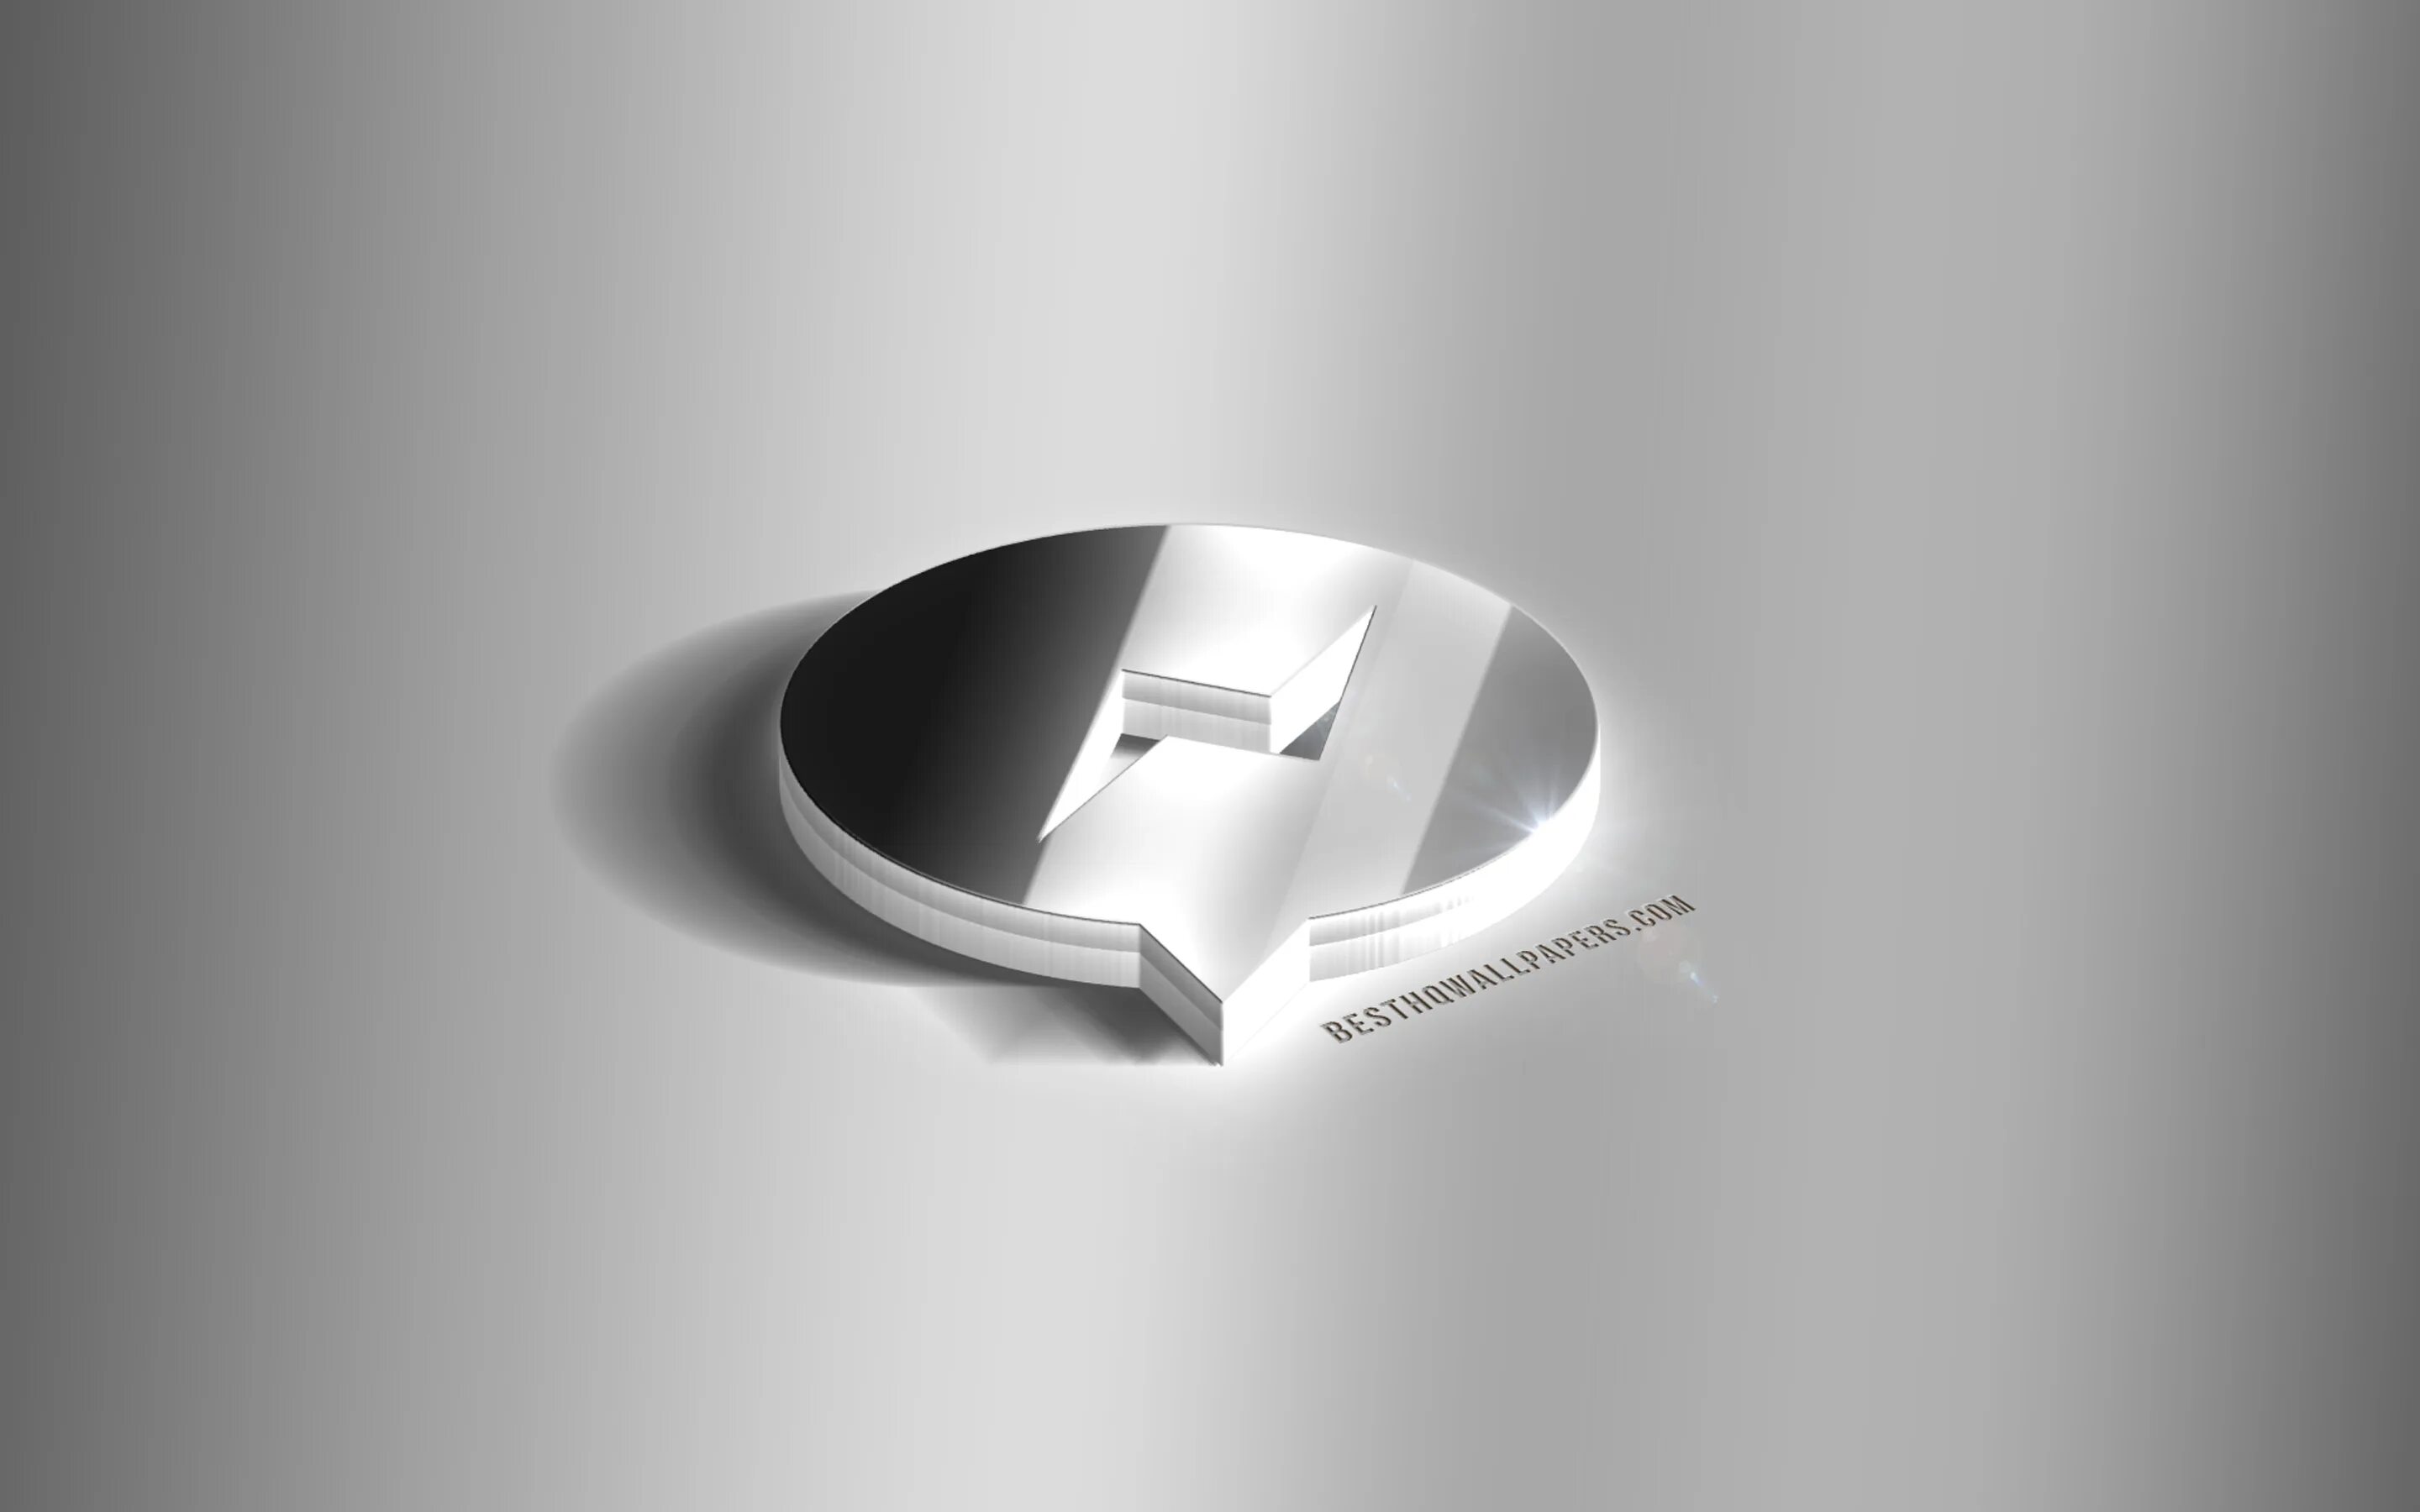 Silverrun логотип. Volvo logo 3d. Фейсбук мессенджер лого. Обои для мессенджера. Д мессенджер